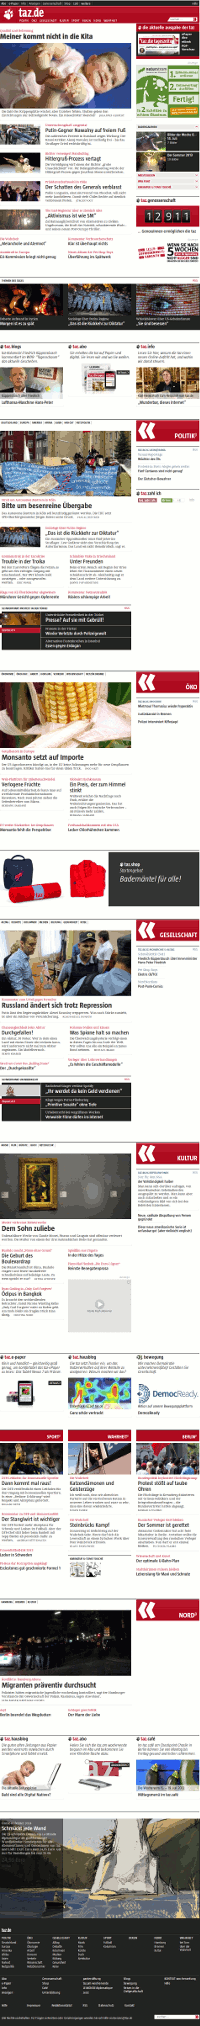 Die neue taz.de (Screenshot)